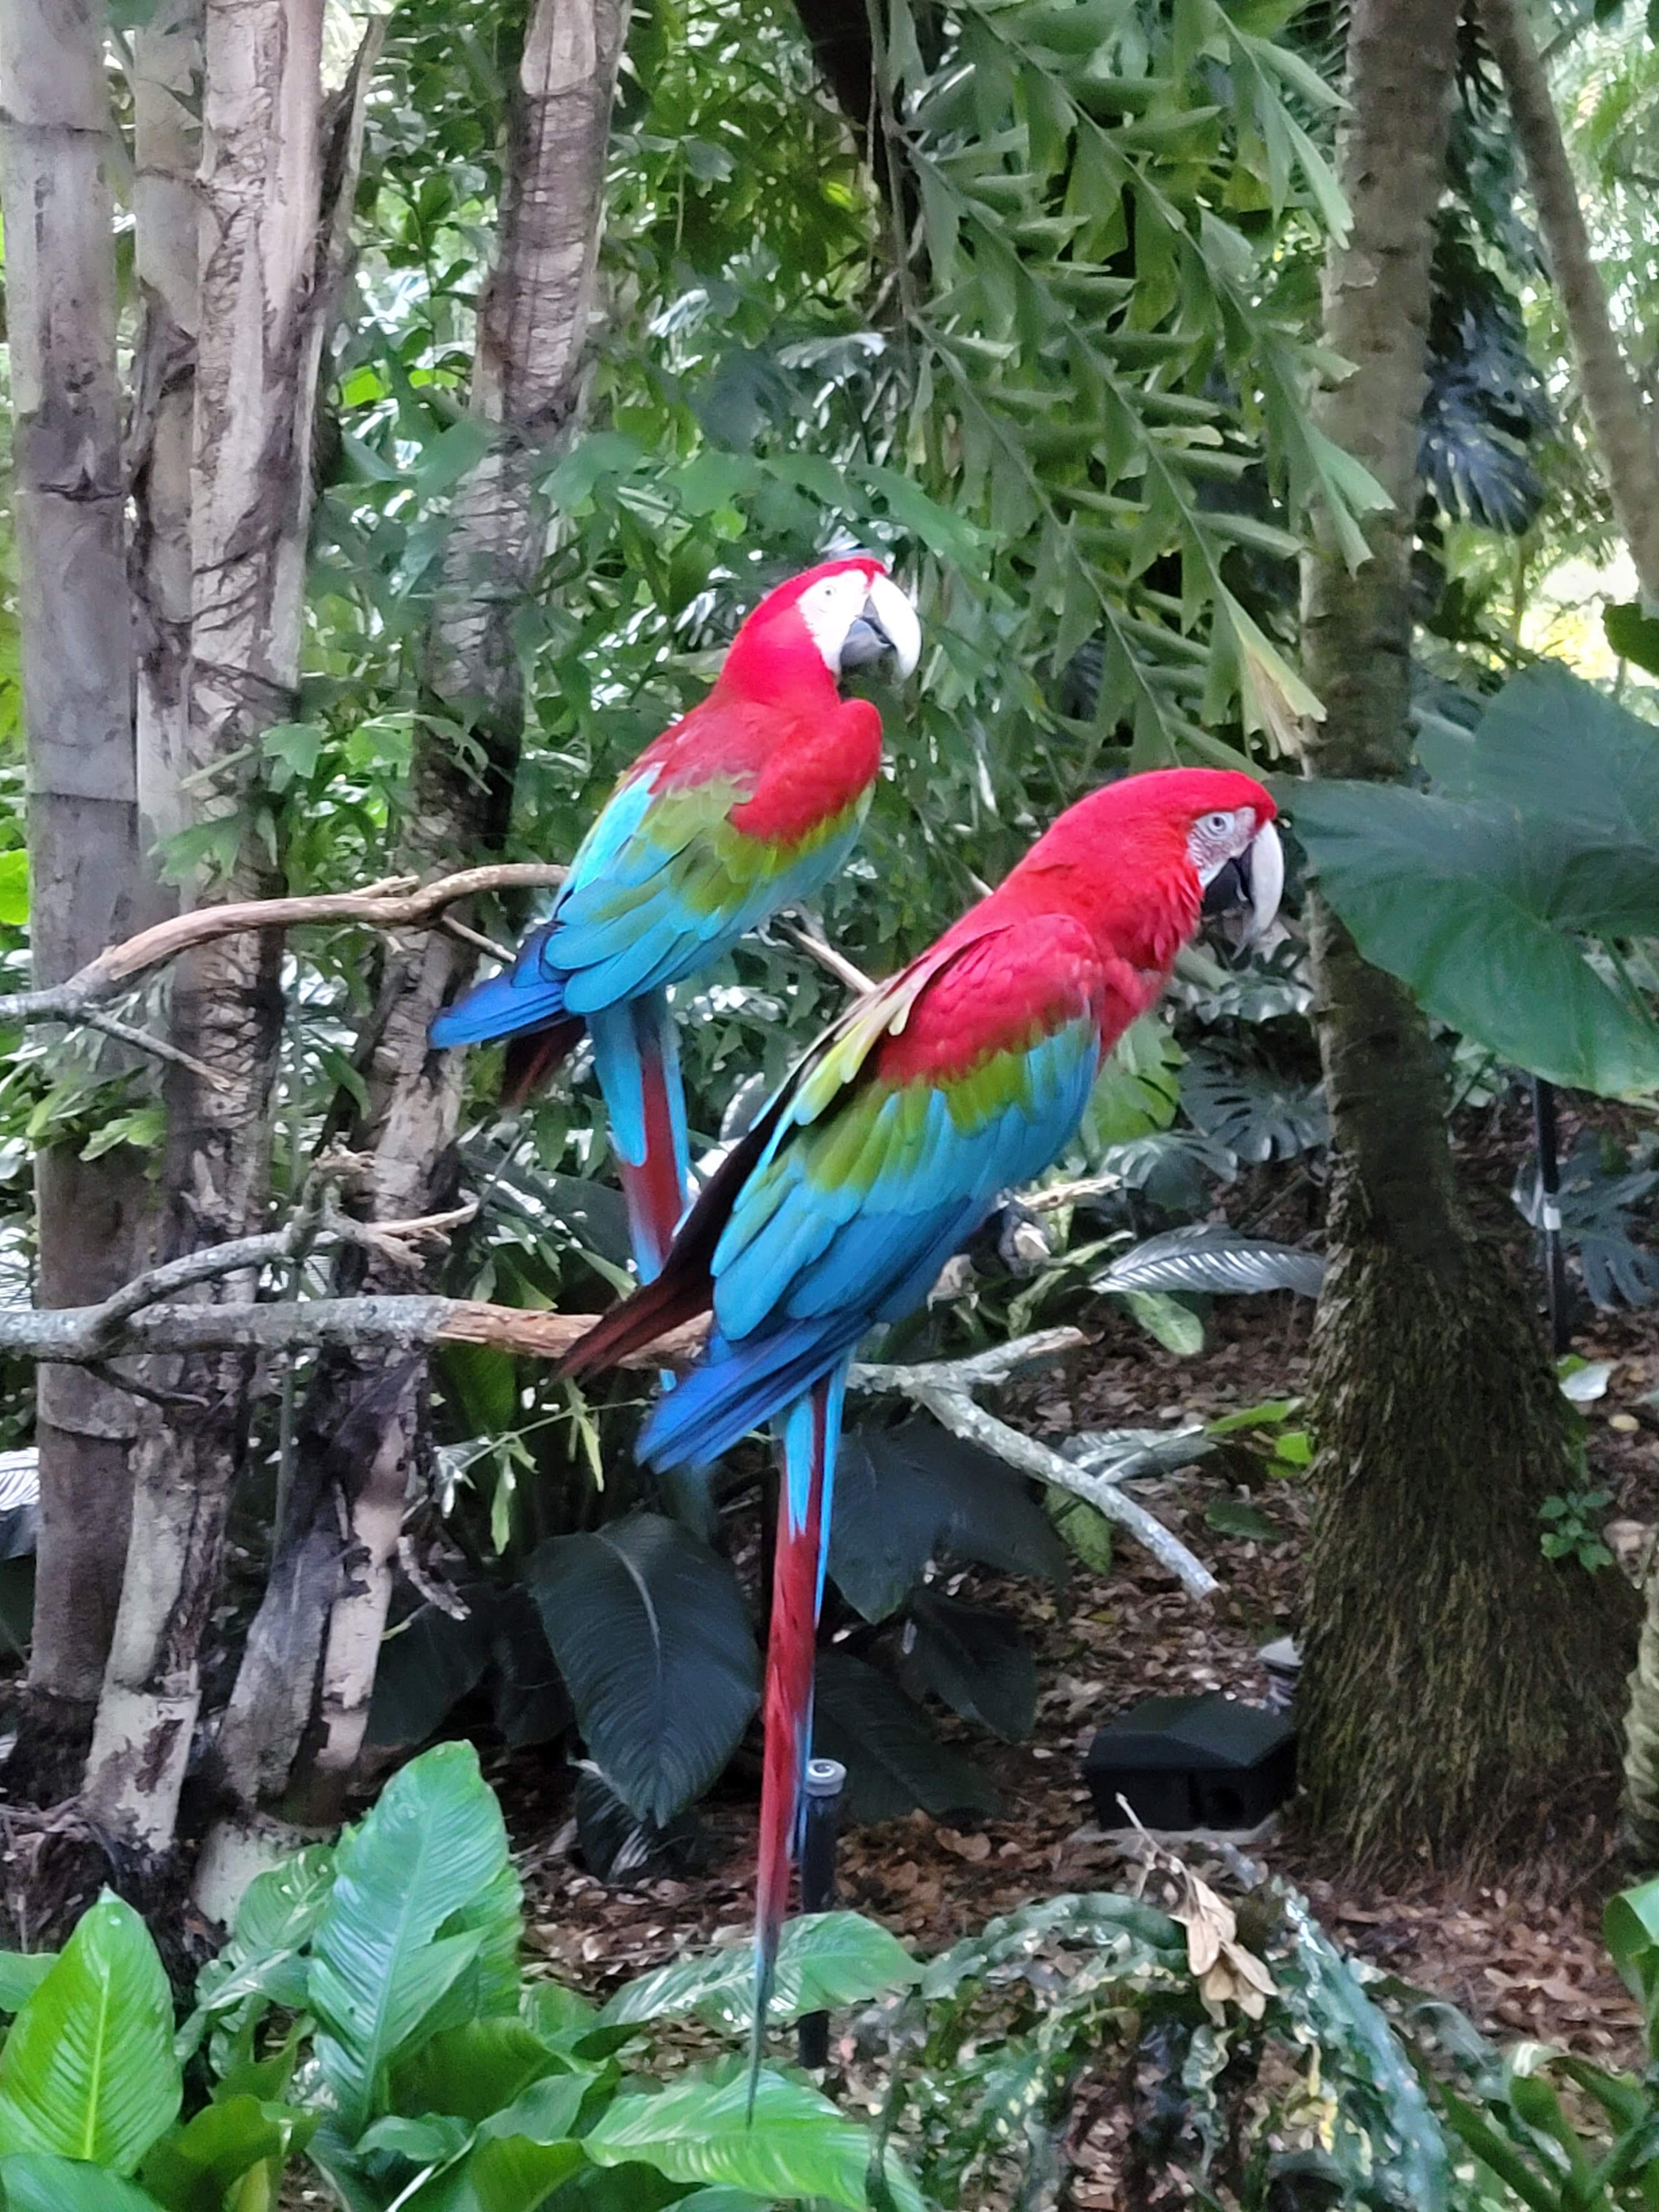 Two parrots having fun